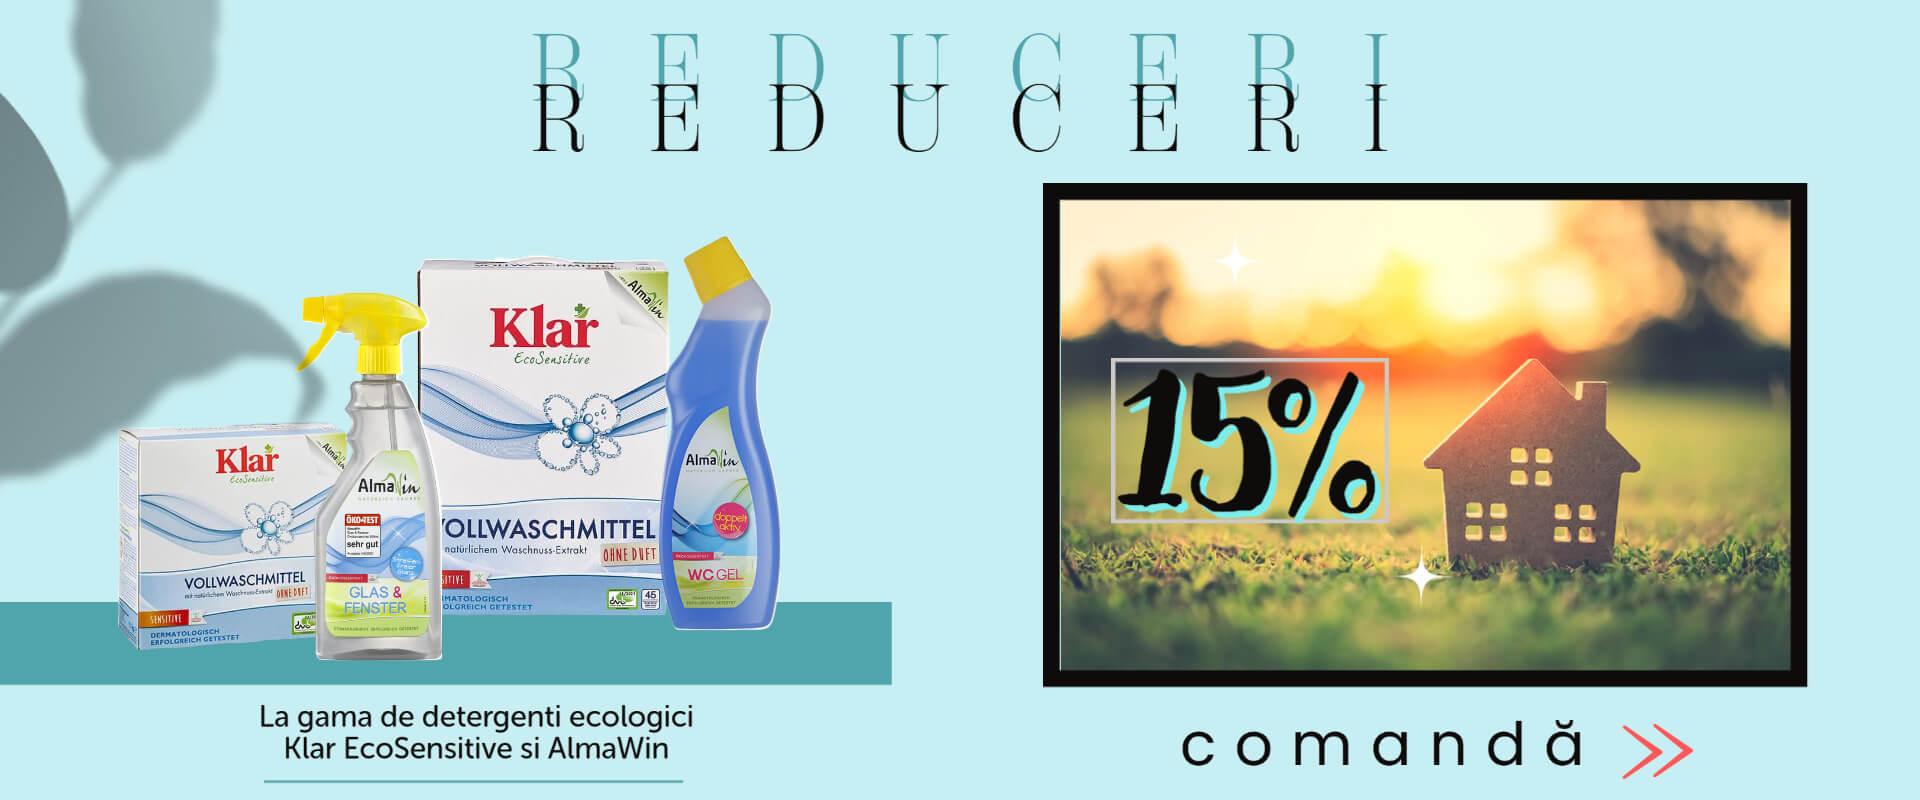 Promo detergenti ecologici